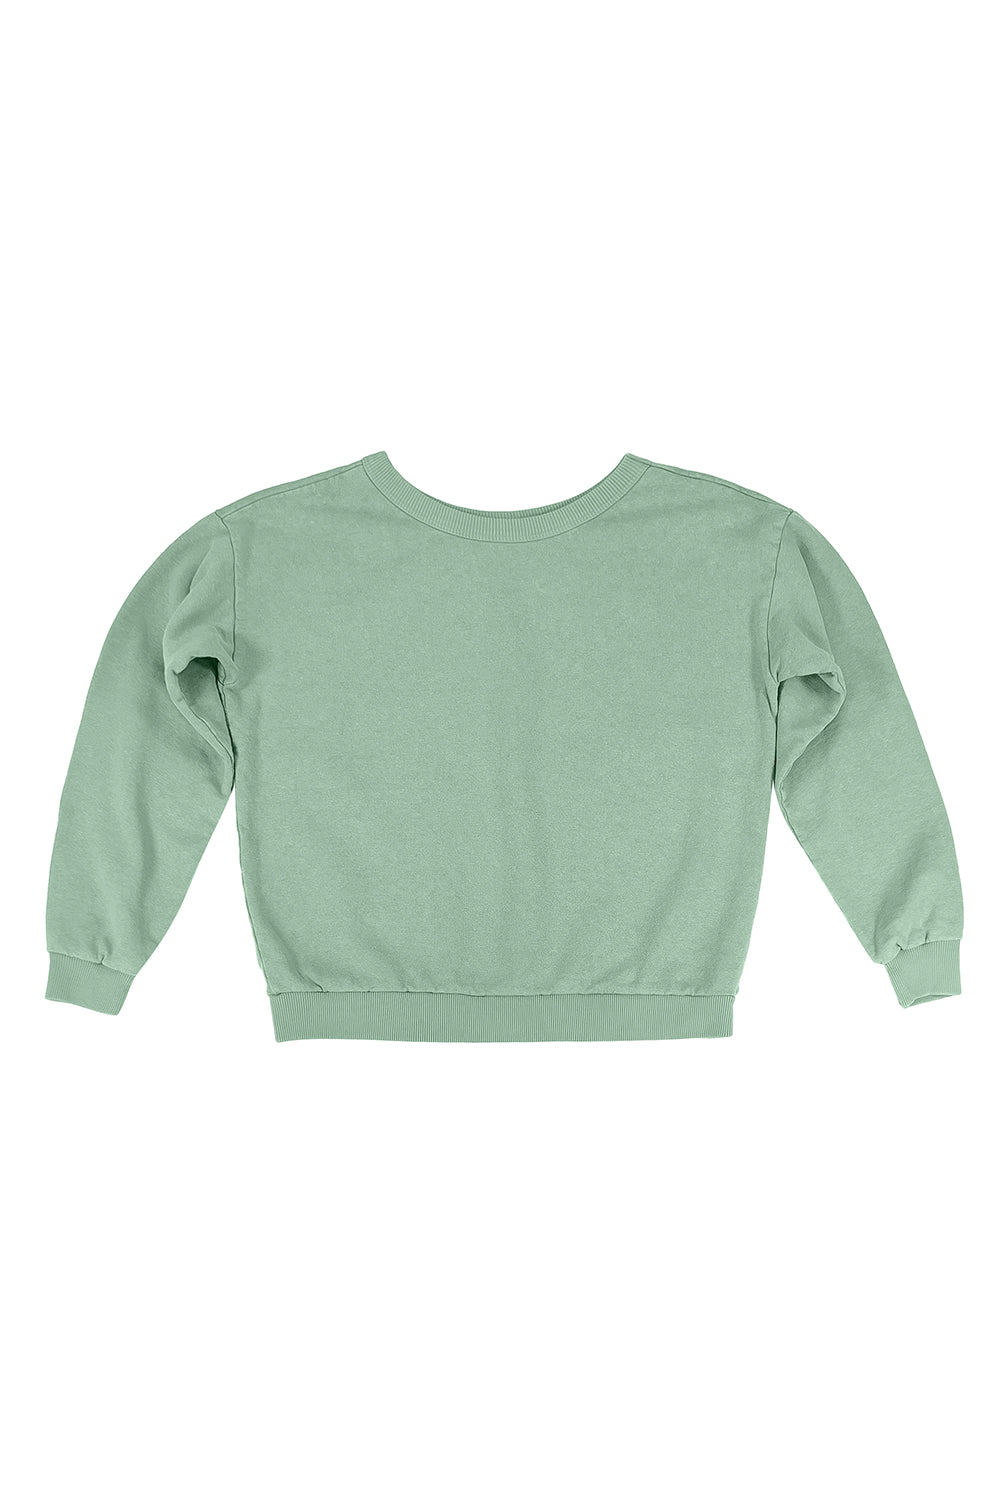 Laguna Cropped Sweatshirt | Jungmaven Hemp Clothing & Accessories / Color: Sage Green